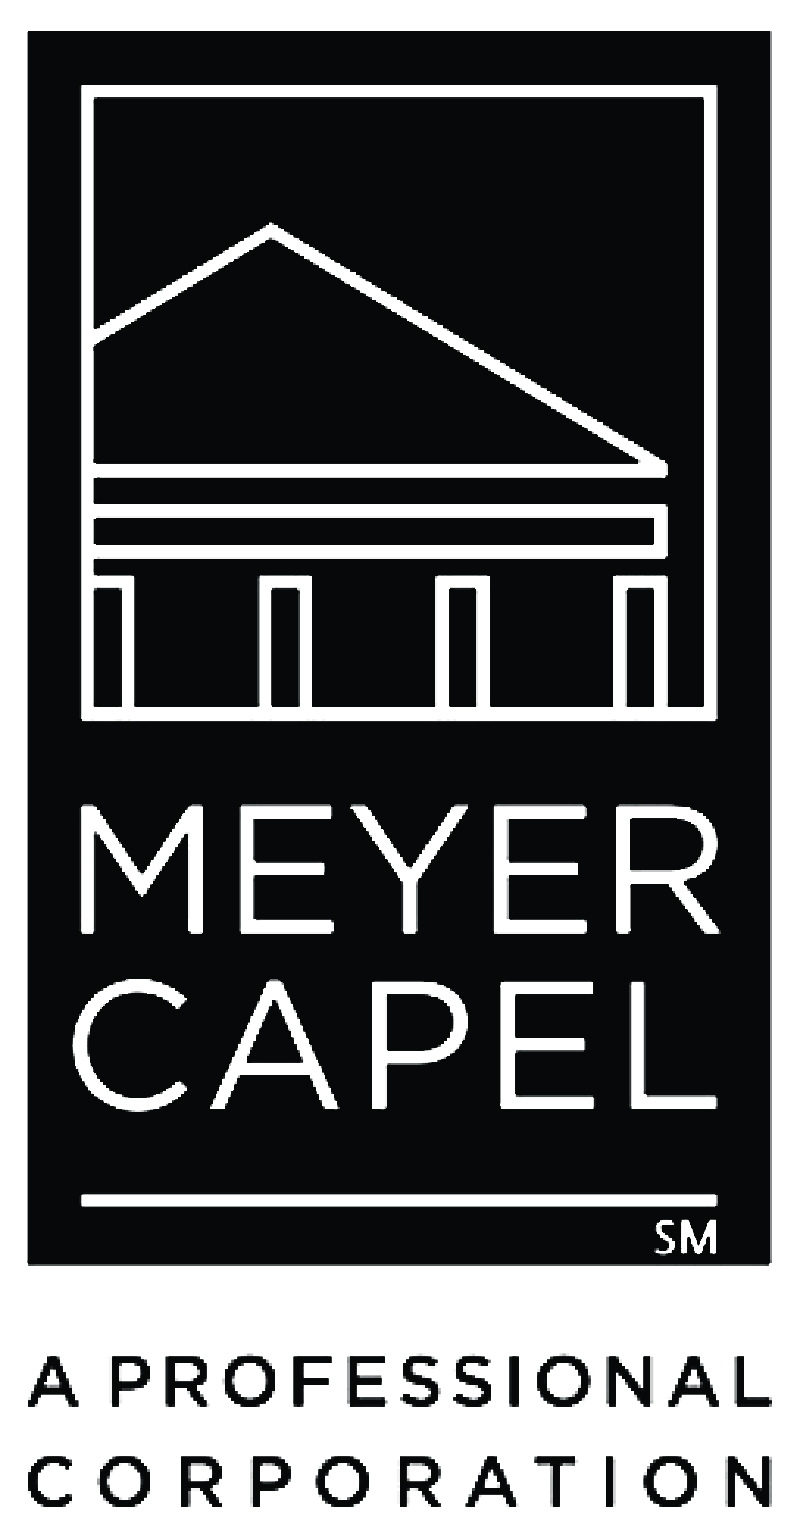 Meyer Capel